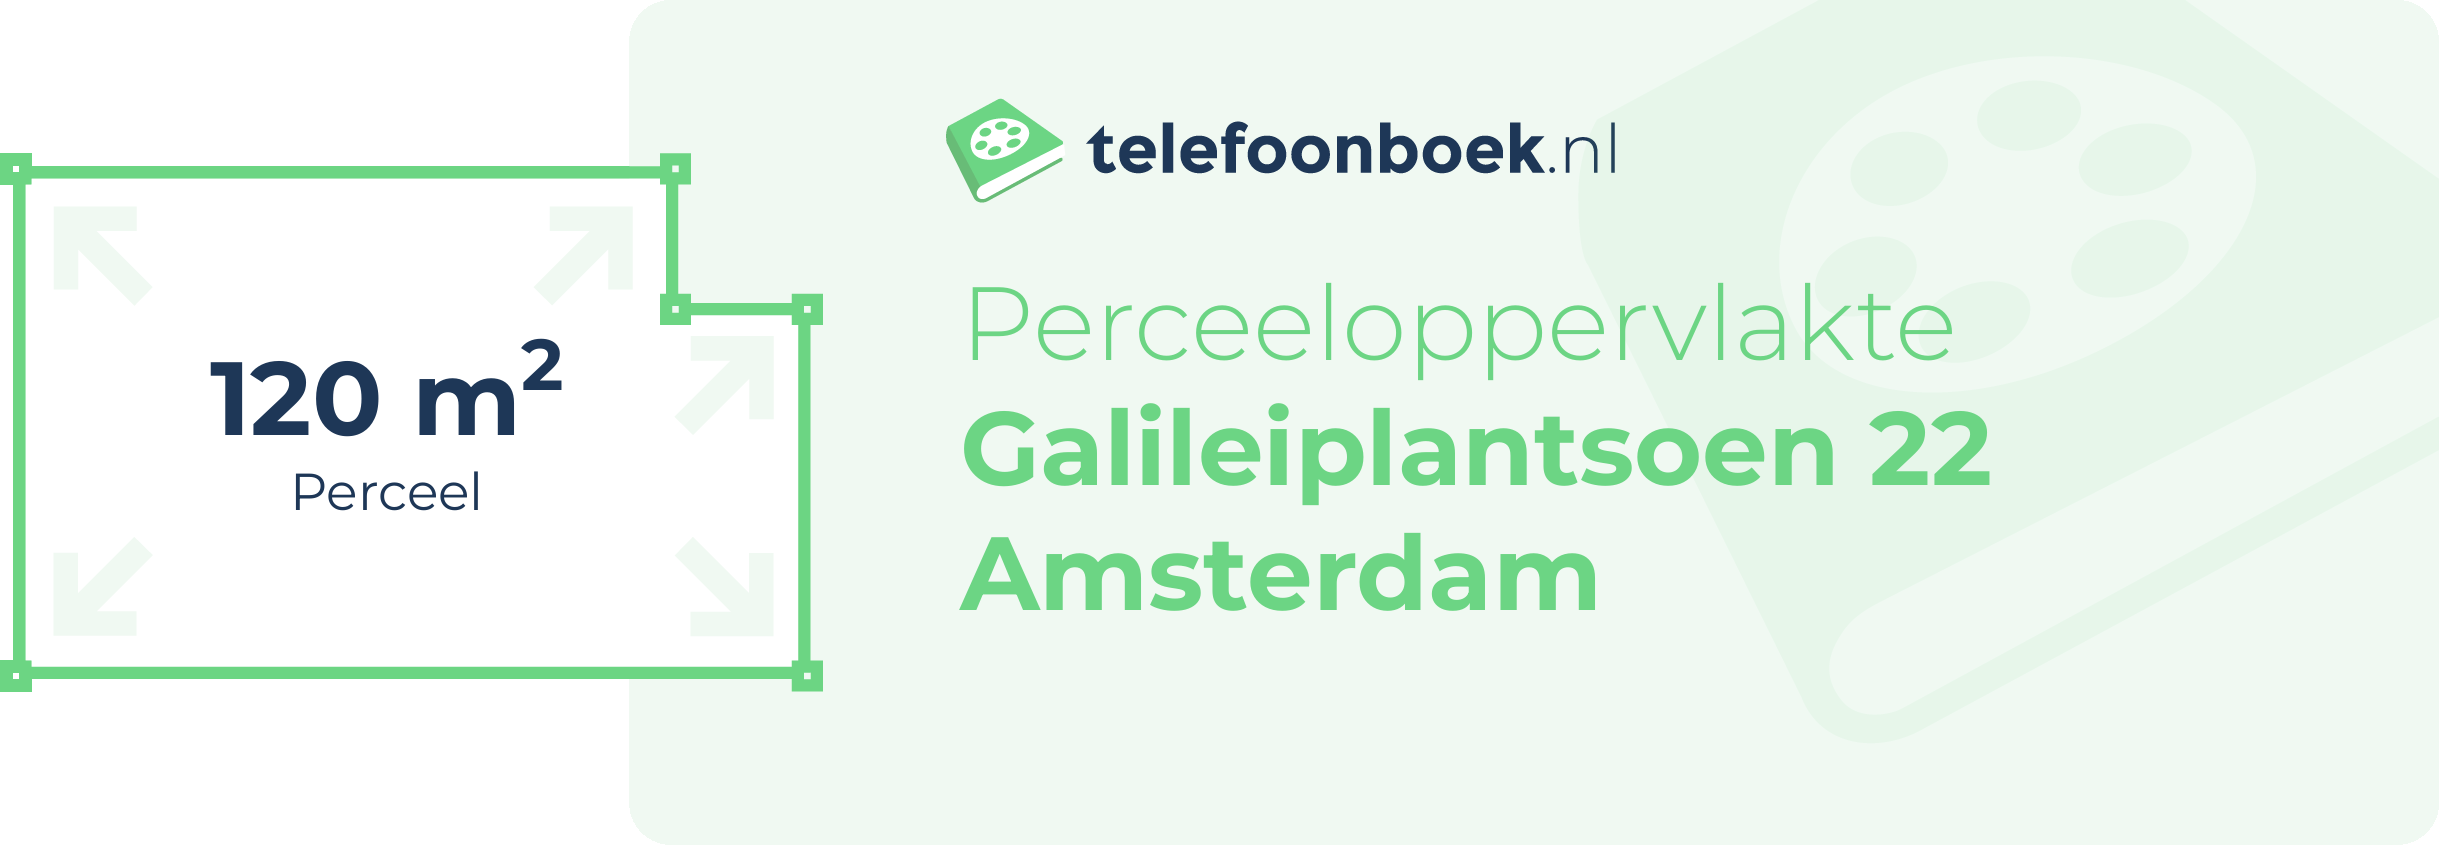 Perceeloppervlakte Galileiplantsoen 22 Amsterdam